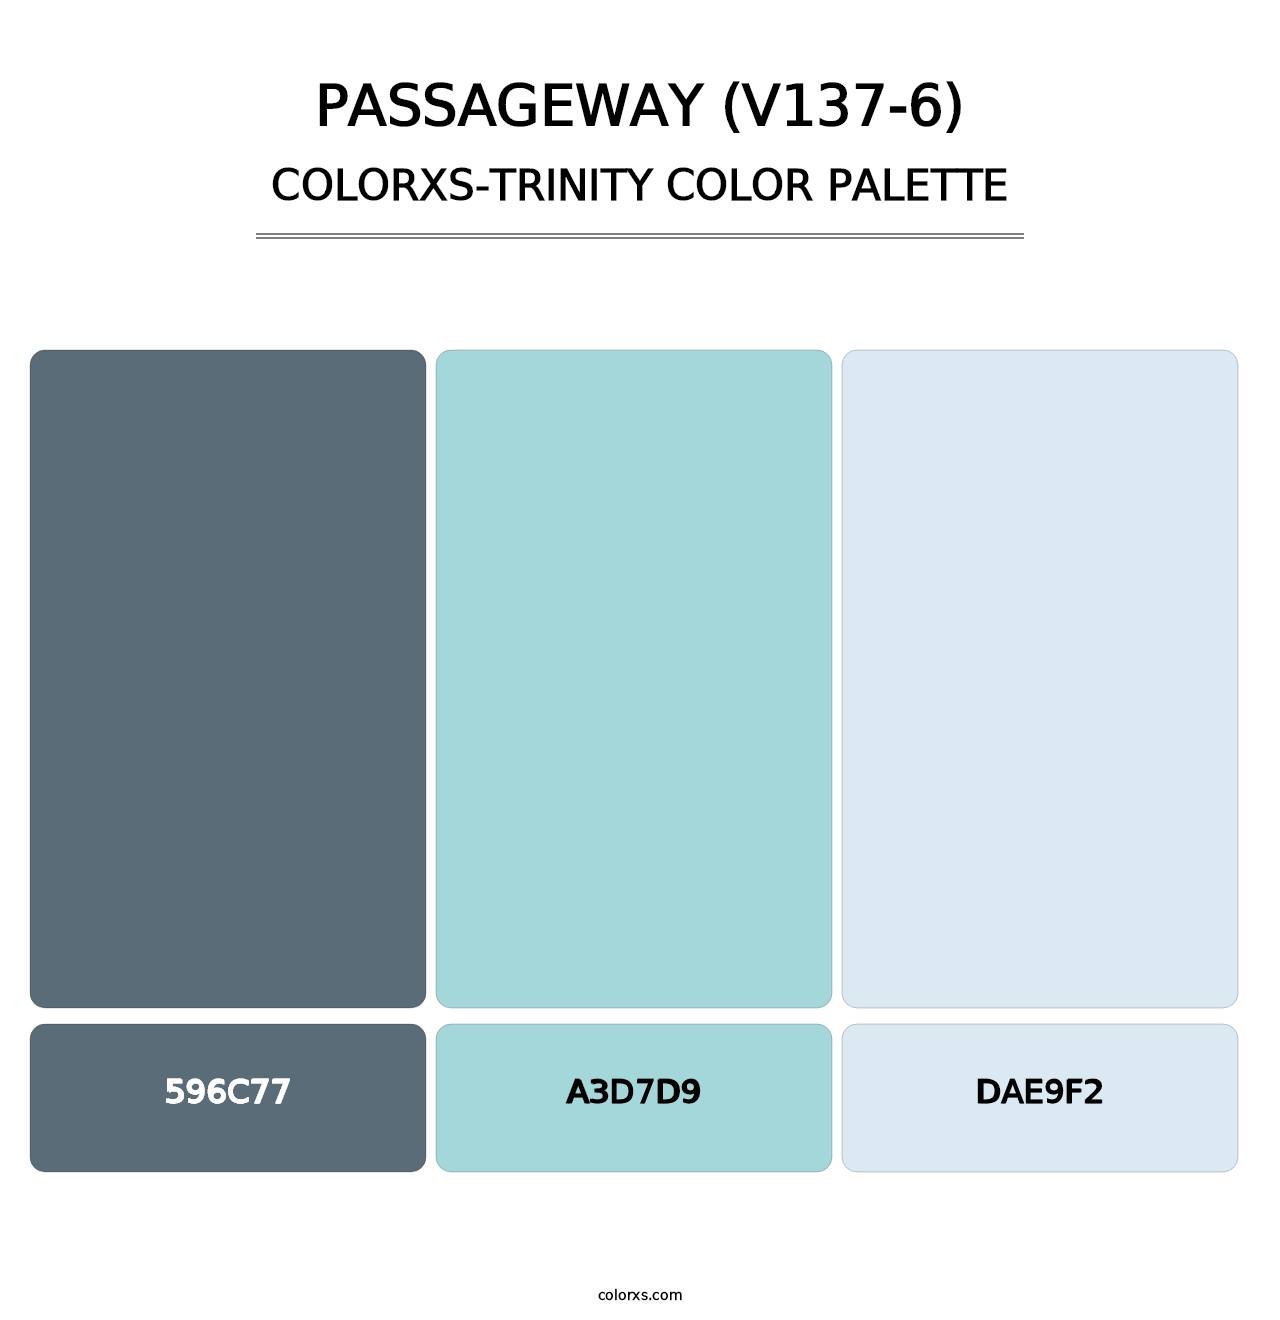 Passageway (V137-6) - Colorxs Trinity Palette